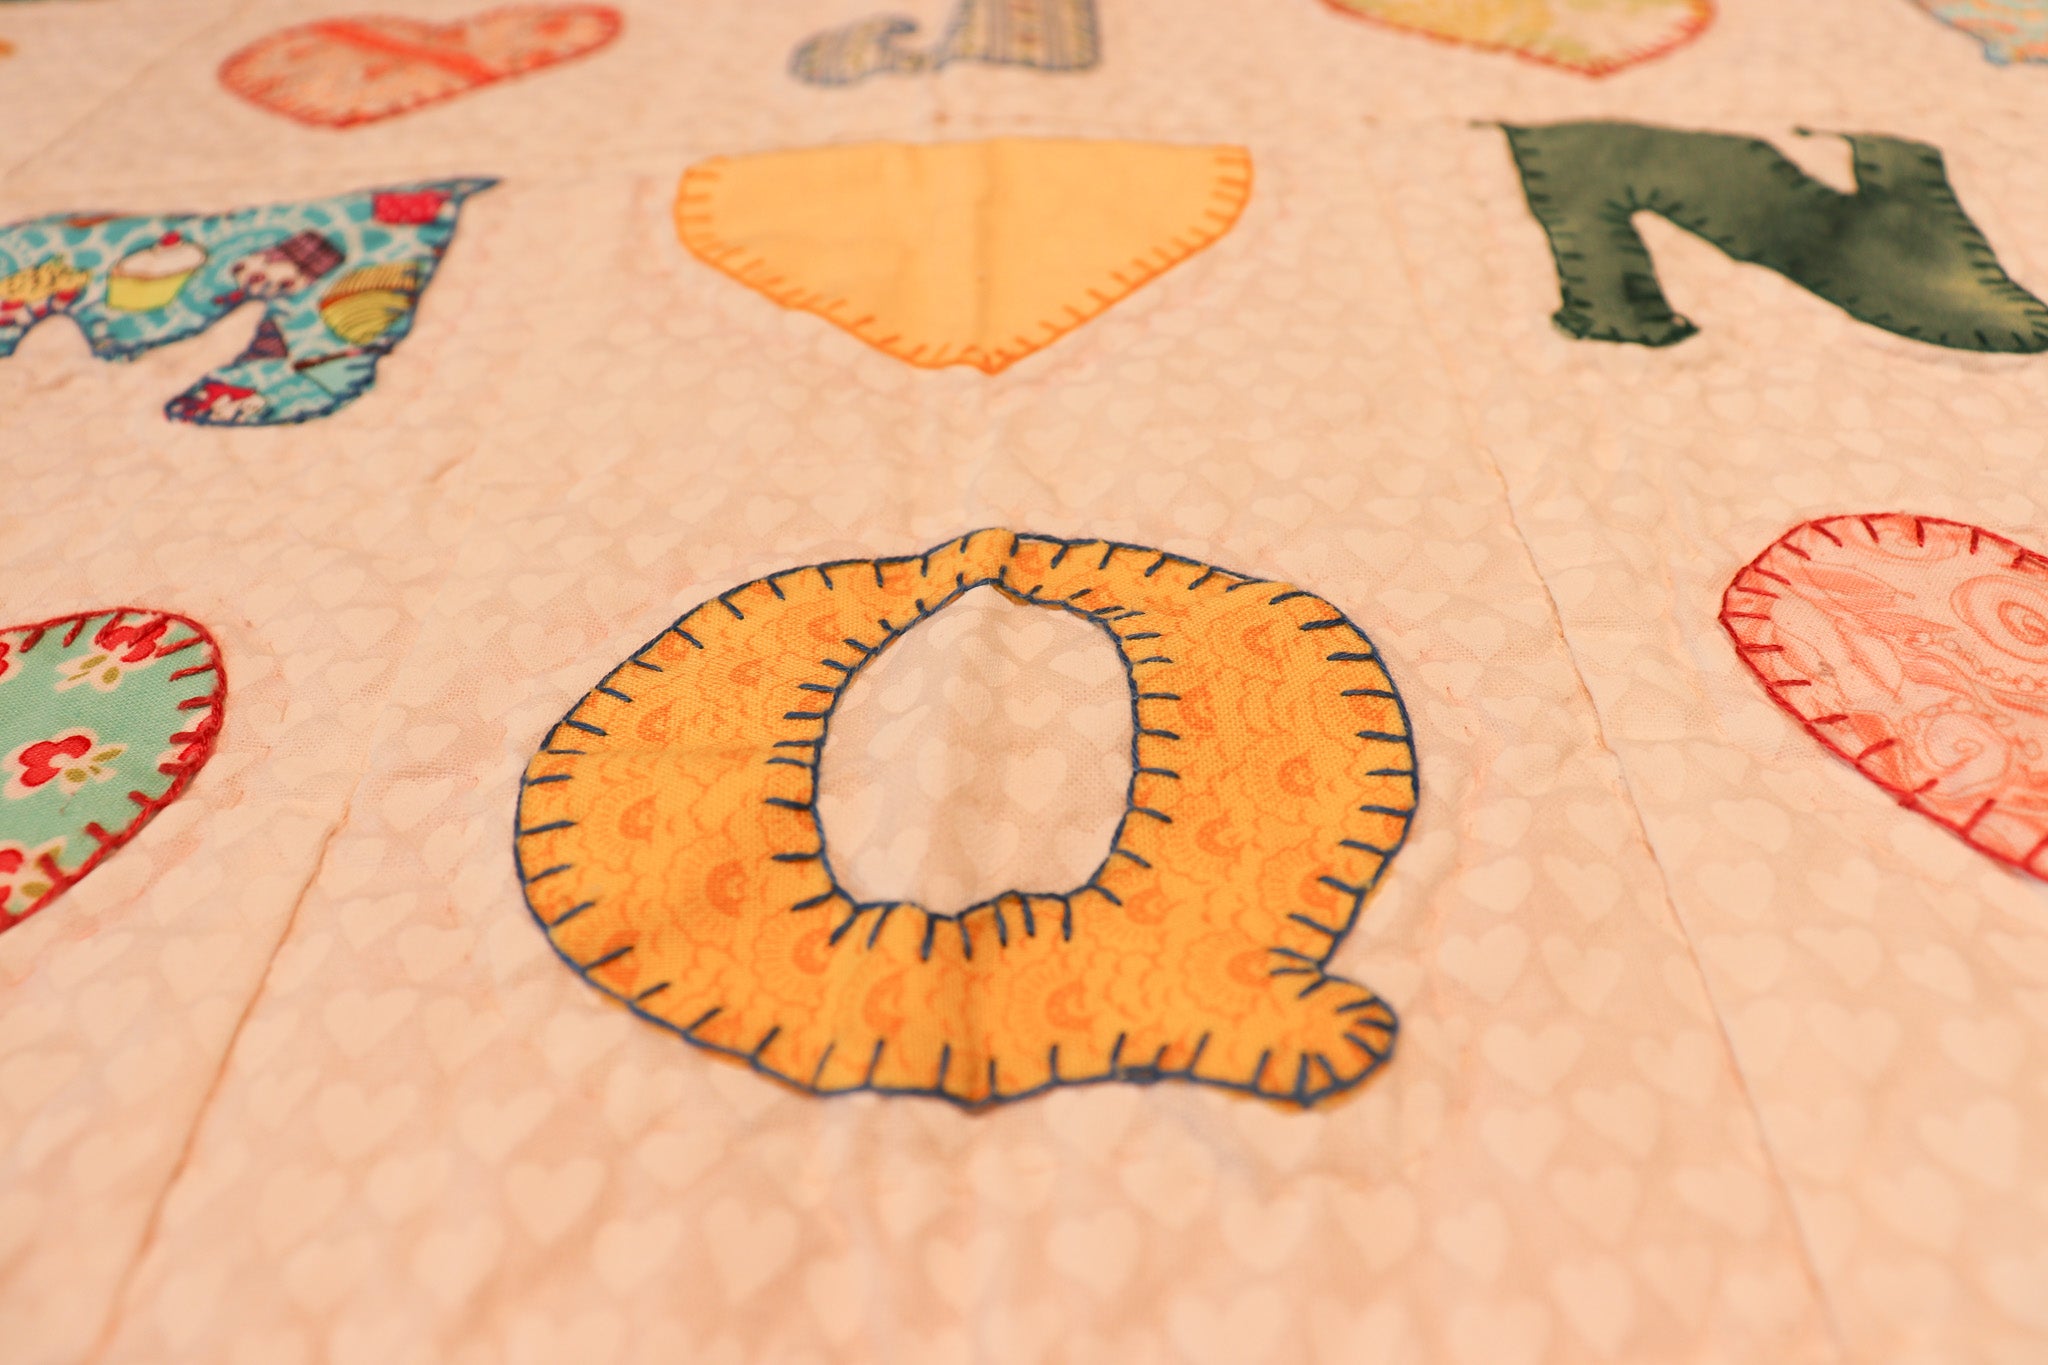 Children's 'ABC Hearts' Handmade Quilt